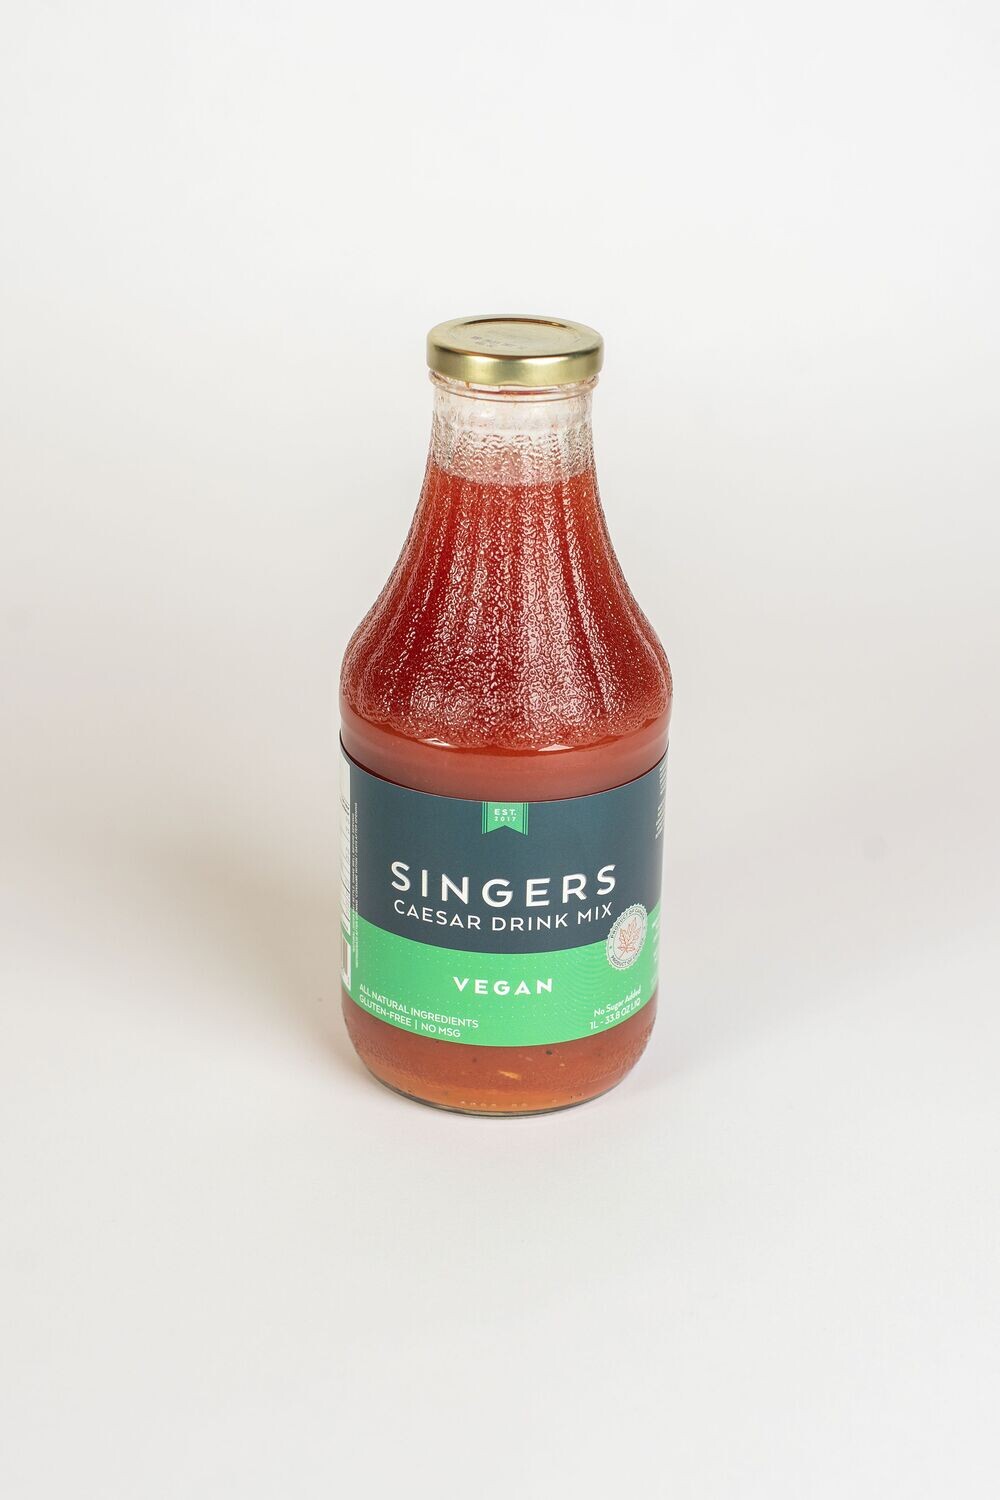 SINGERS Vegan Caesar Drink Mix – 1L Bottle